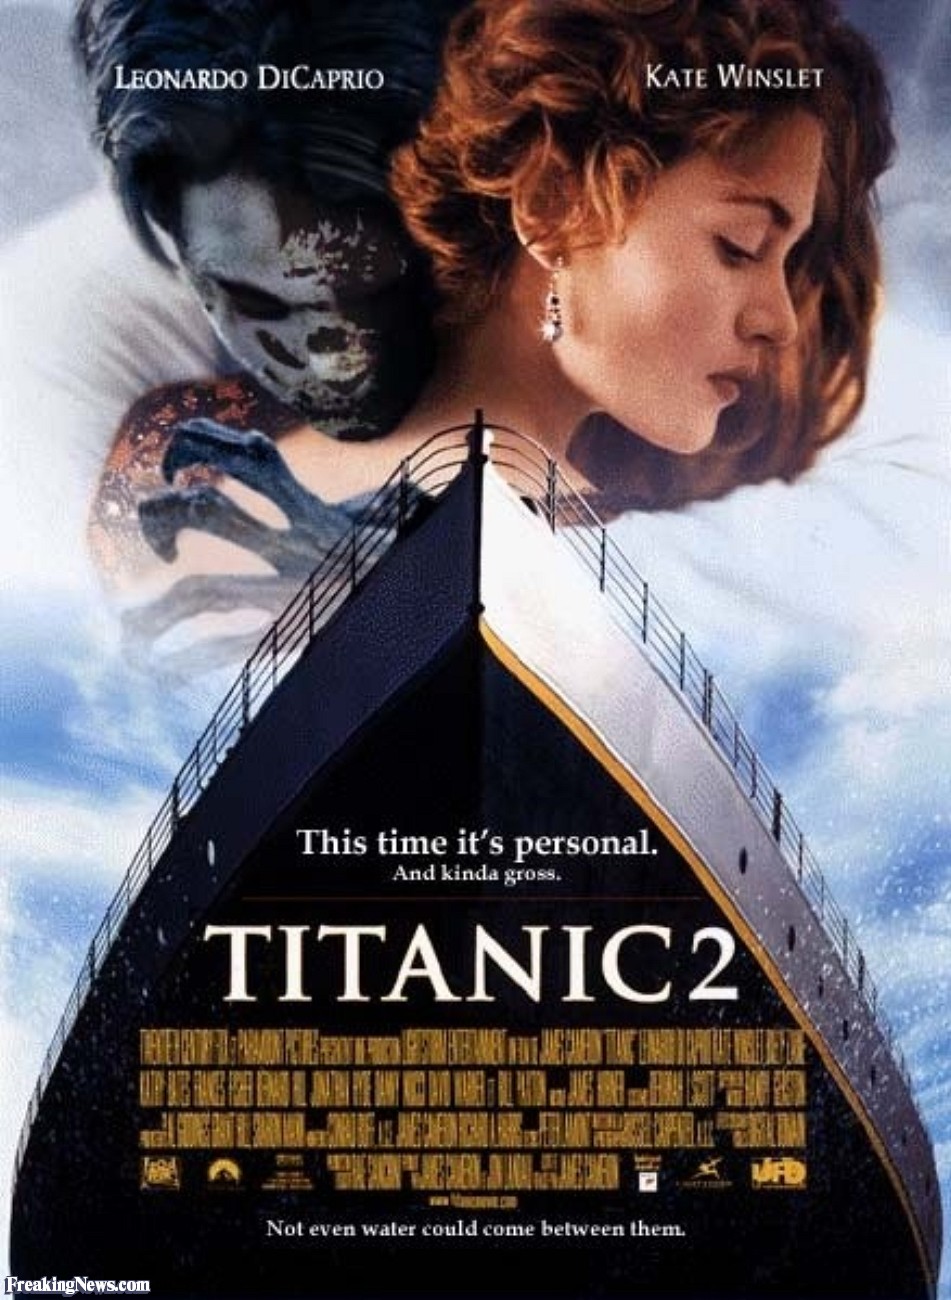 Titanic 2 - Jack's Back Reboot (2020 Movie Trailer Parody) - Cinema Sebosa